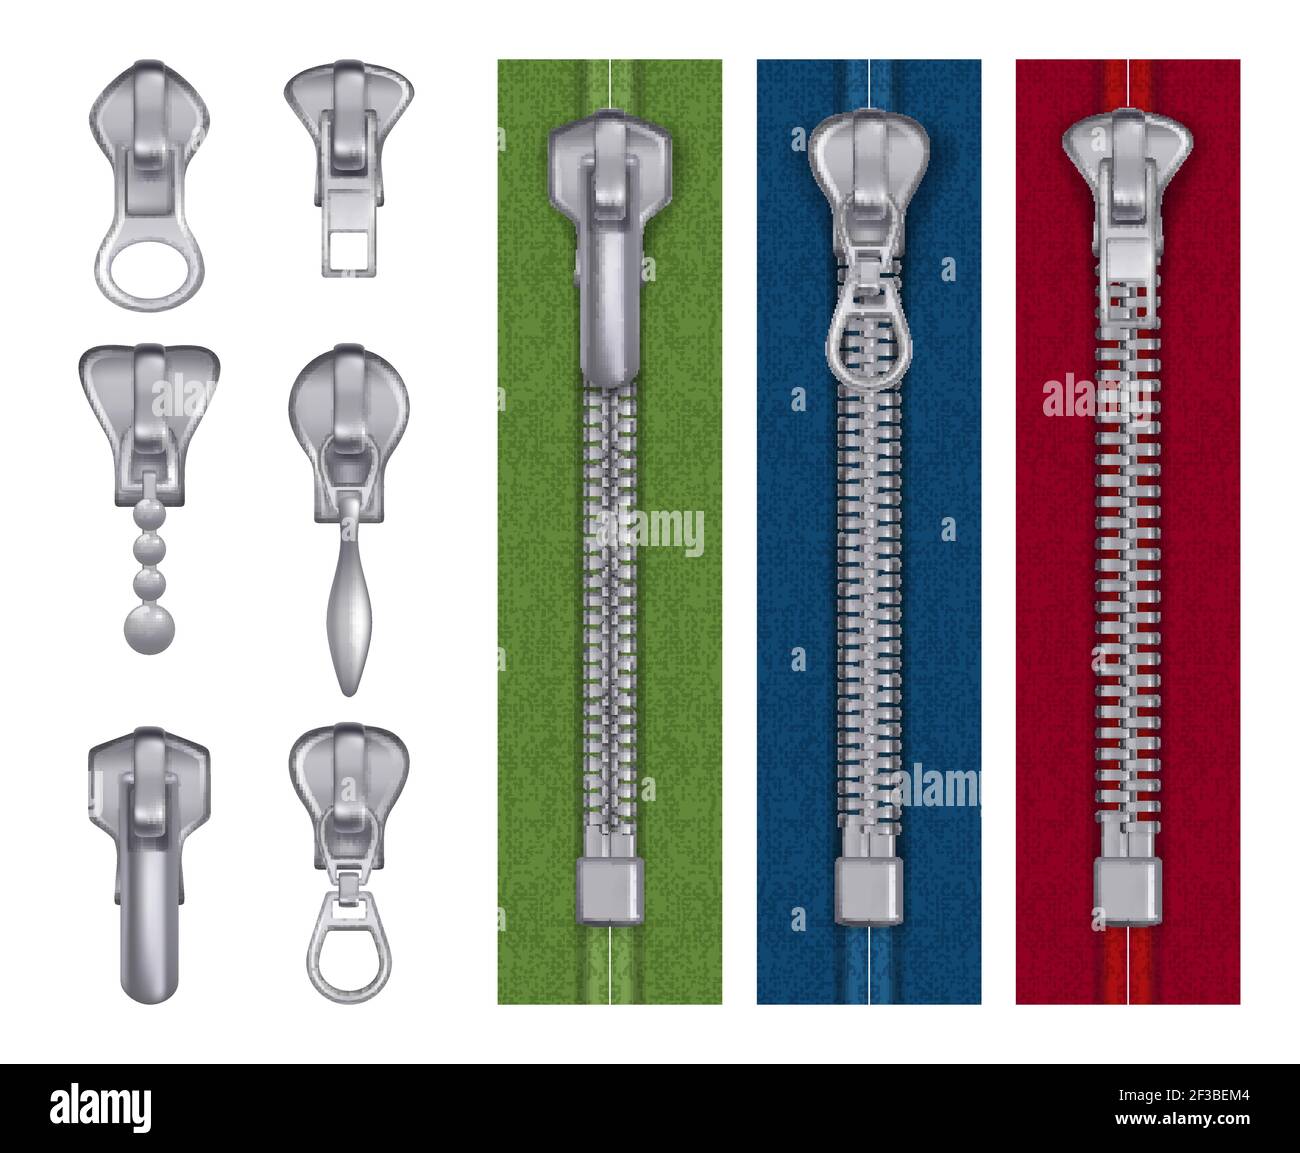 Fashion zipper. Steel fabric tailor items decorative seamstress handbag locks buckles vector realistic illustrations Stock Vector